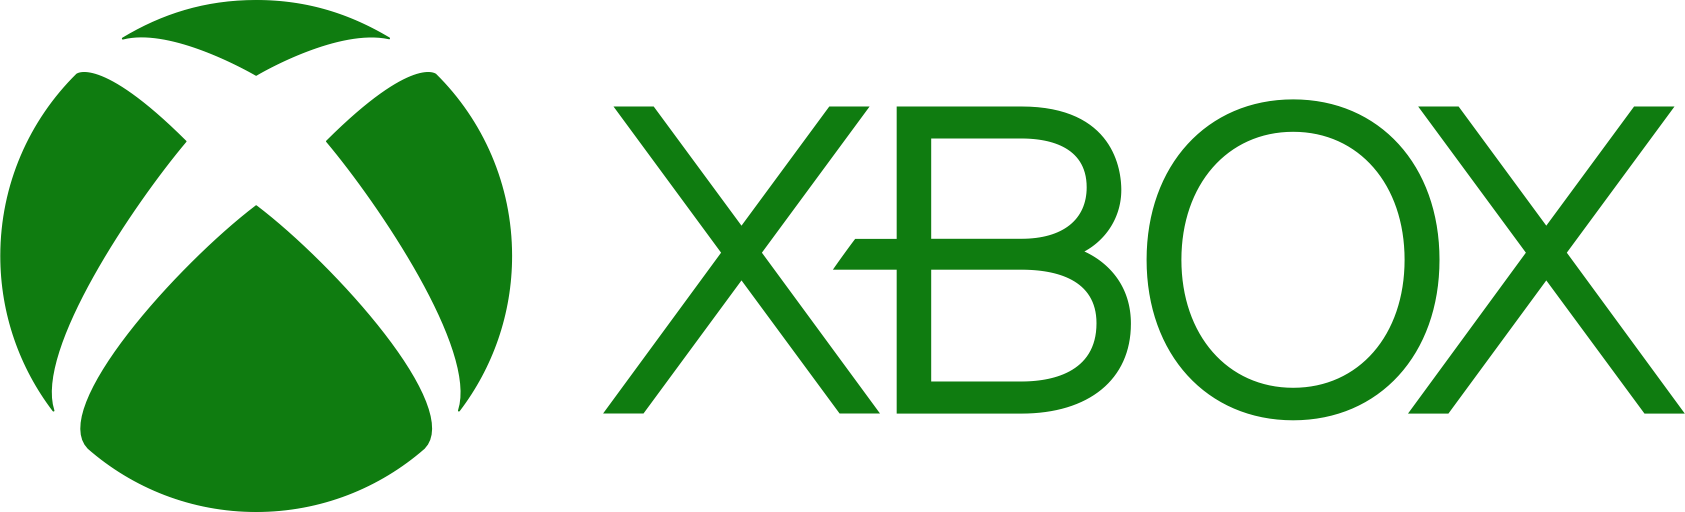 Xbox Logo Png - KibrisPDR